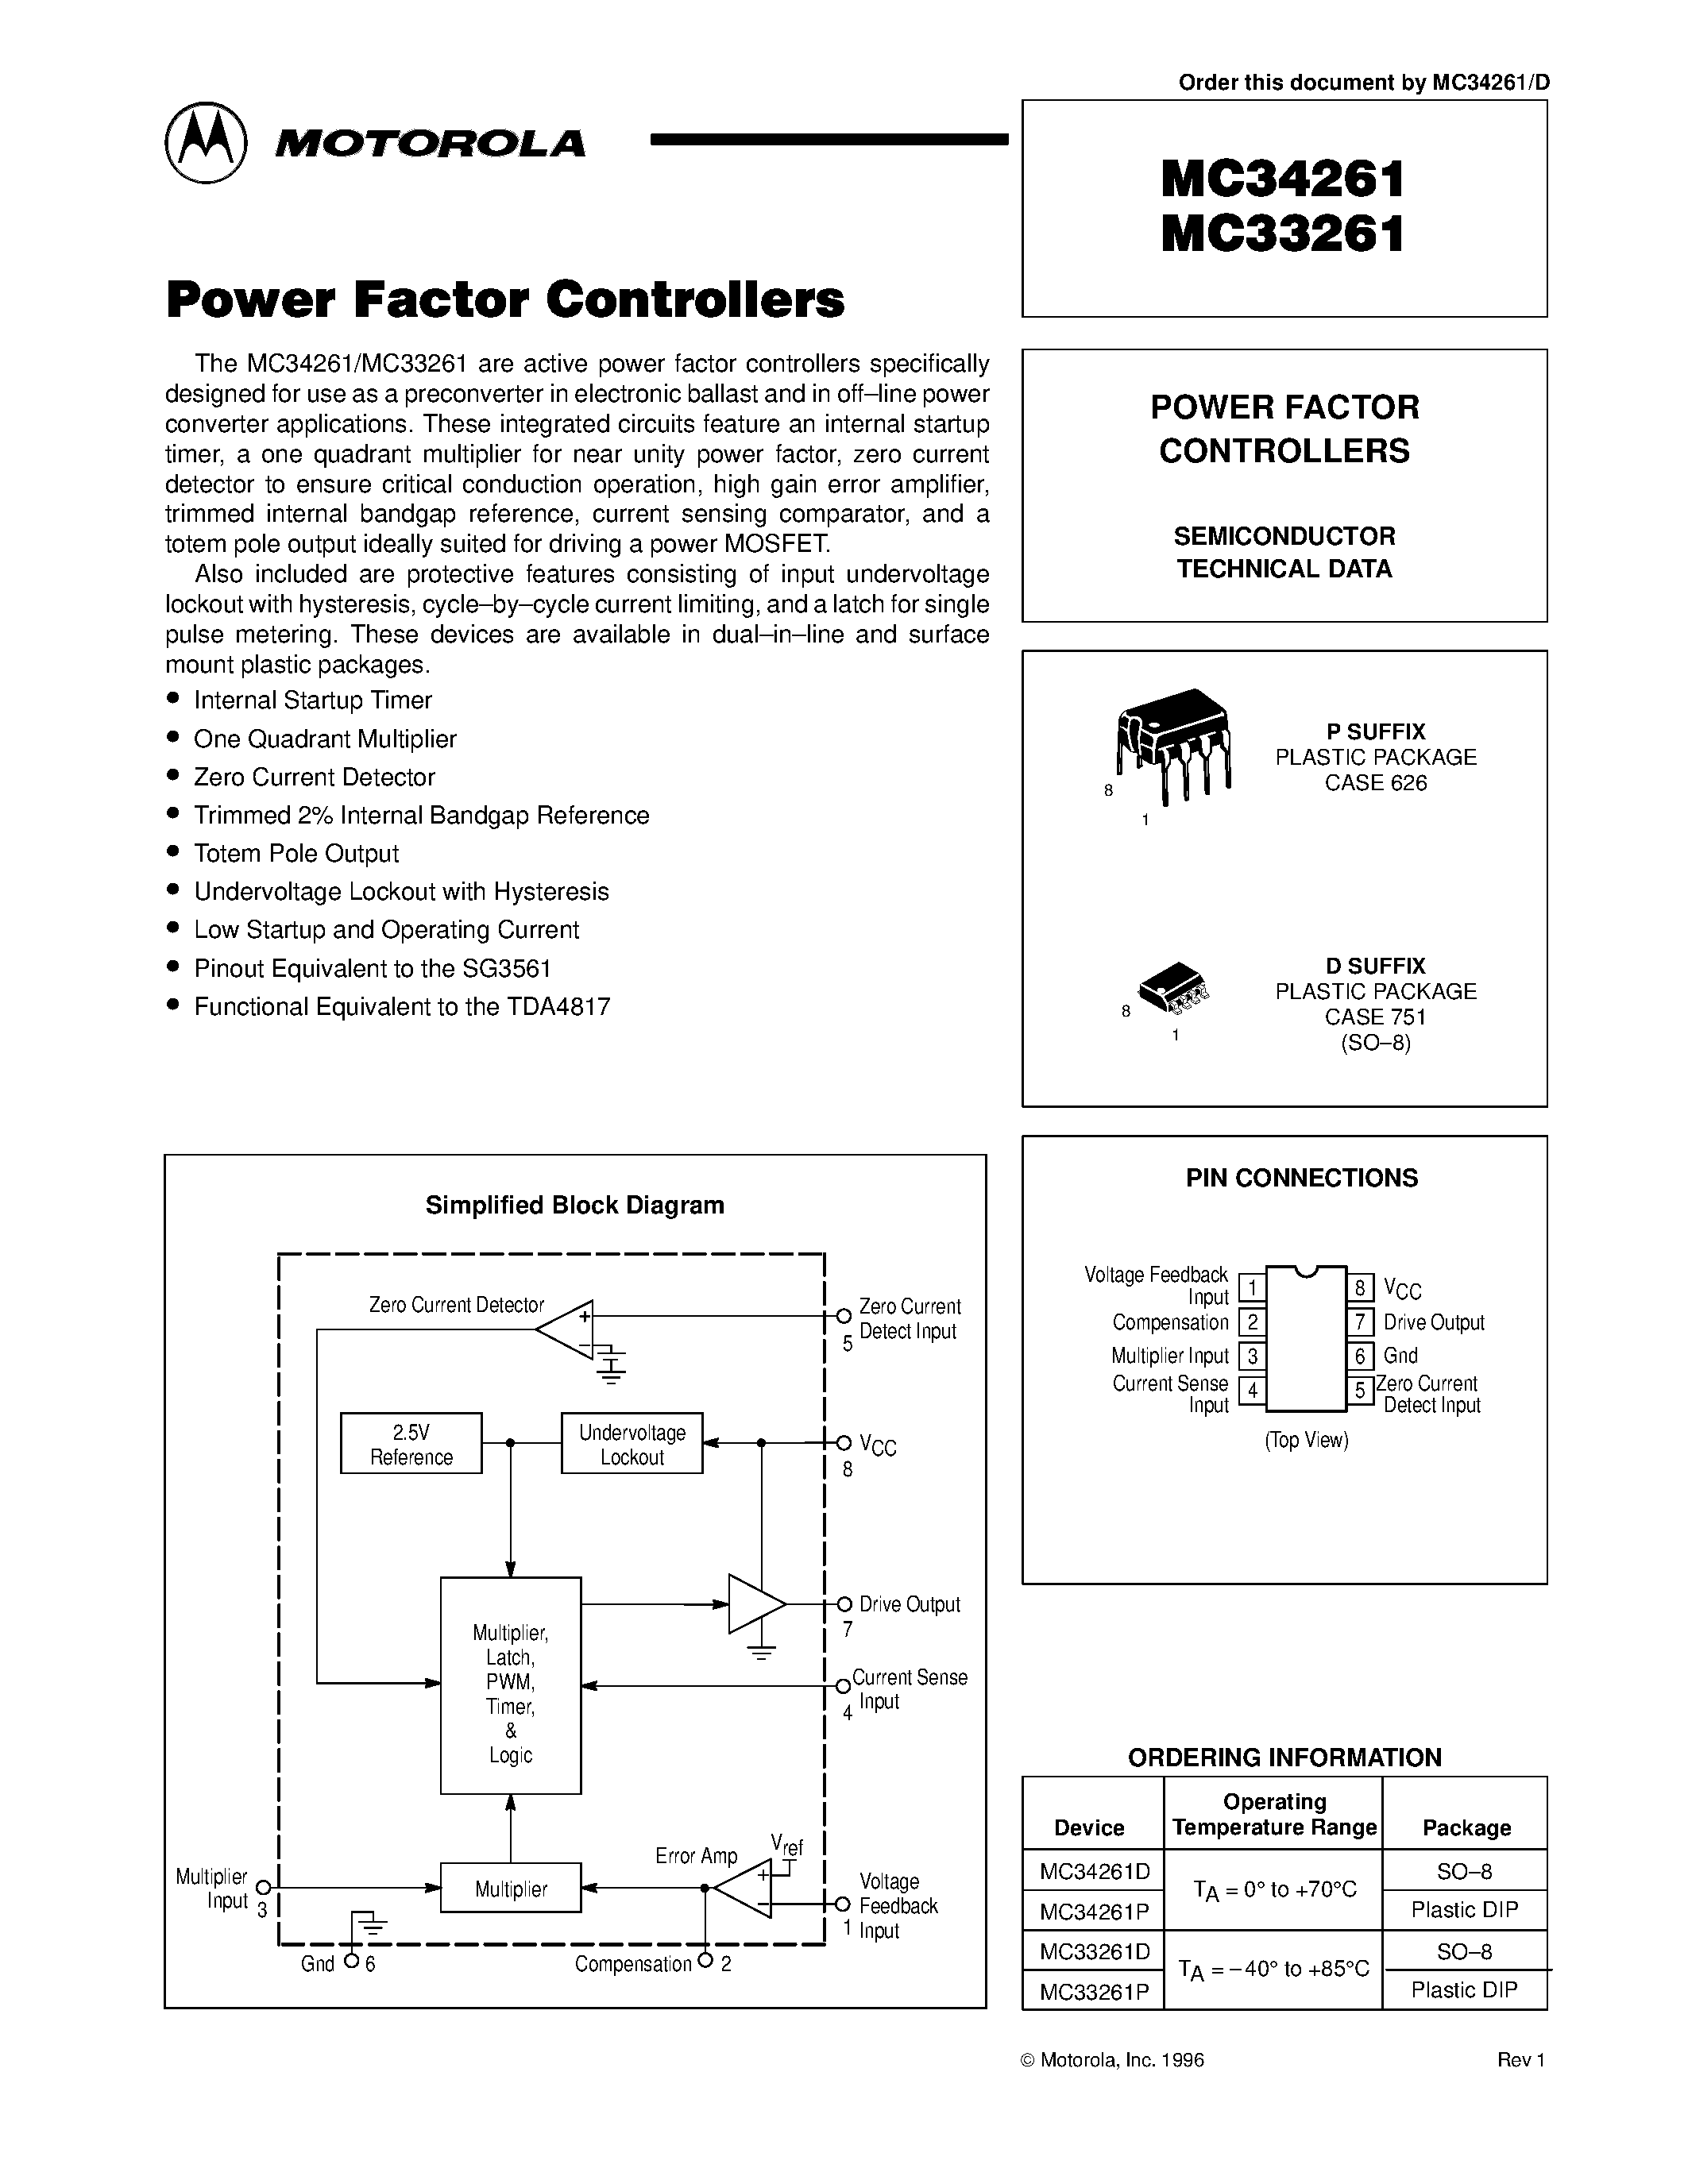 Datasheet MC33261 - (MC33261 / MC34261) POWER FACTOR CONTROLLERS page 1